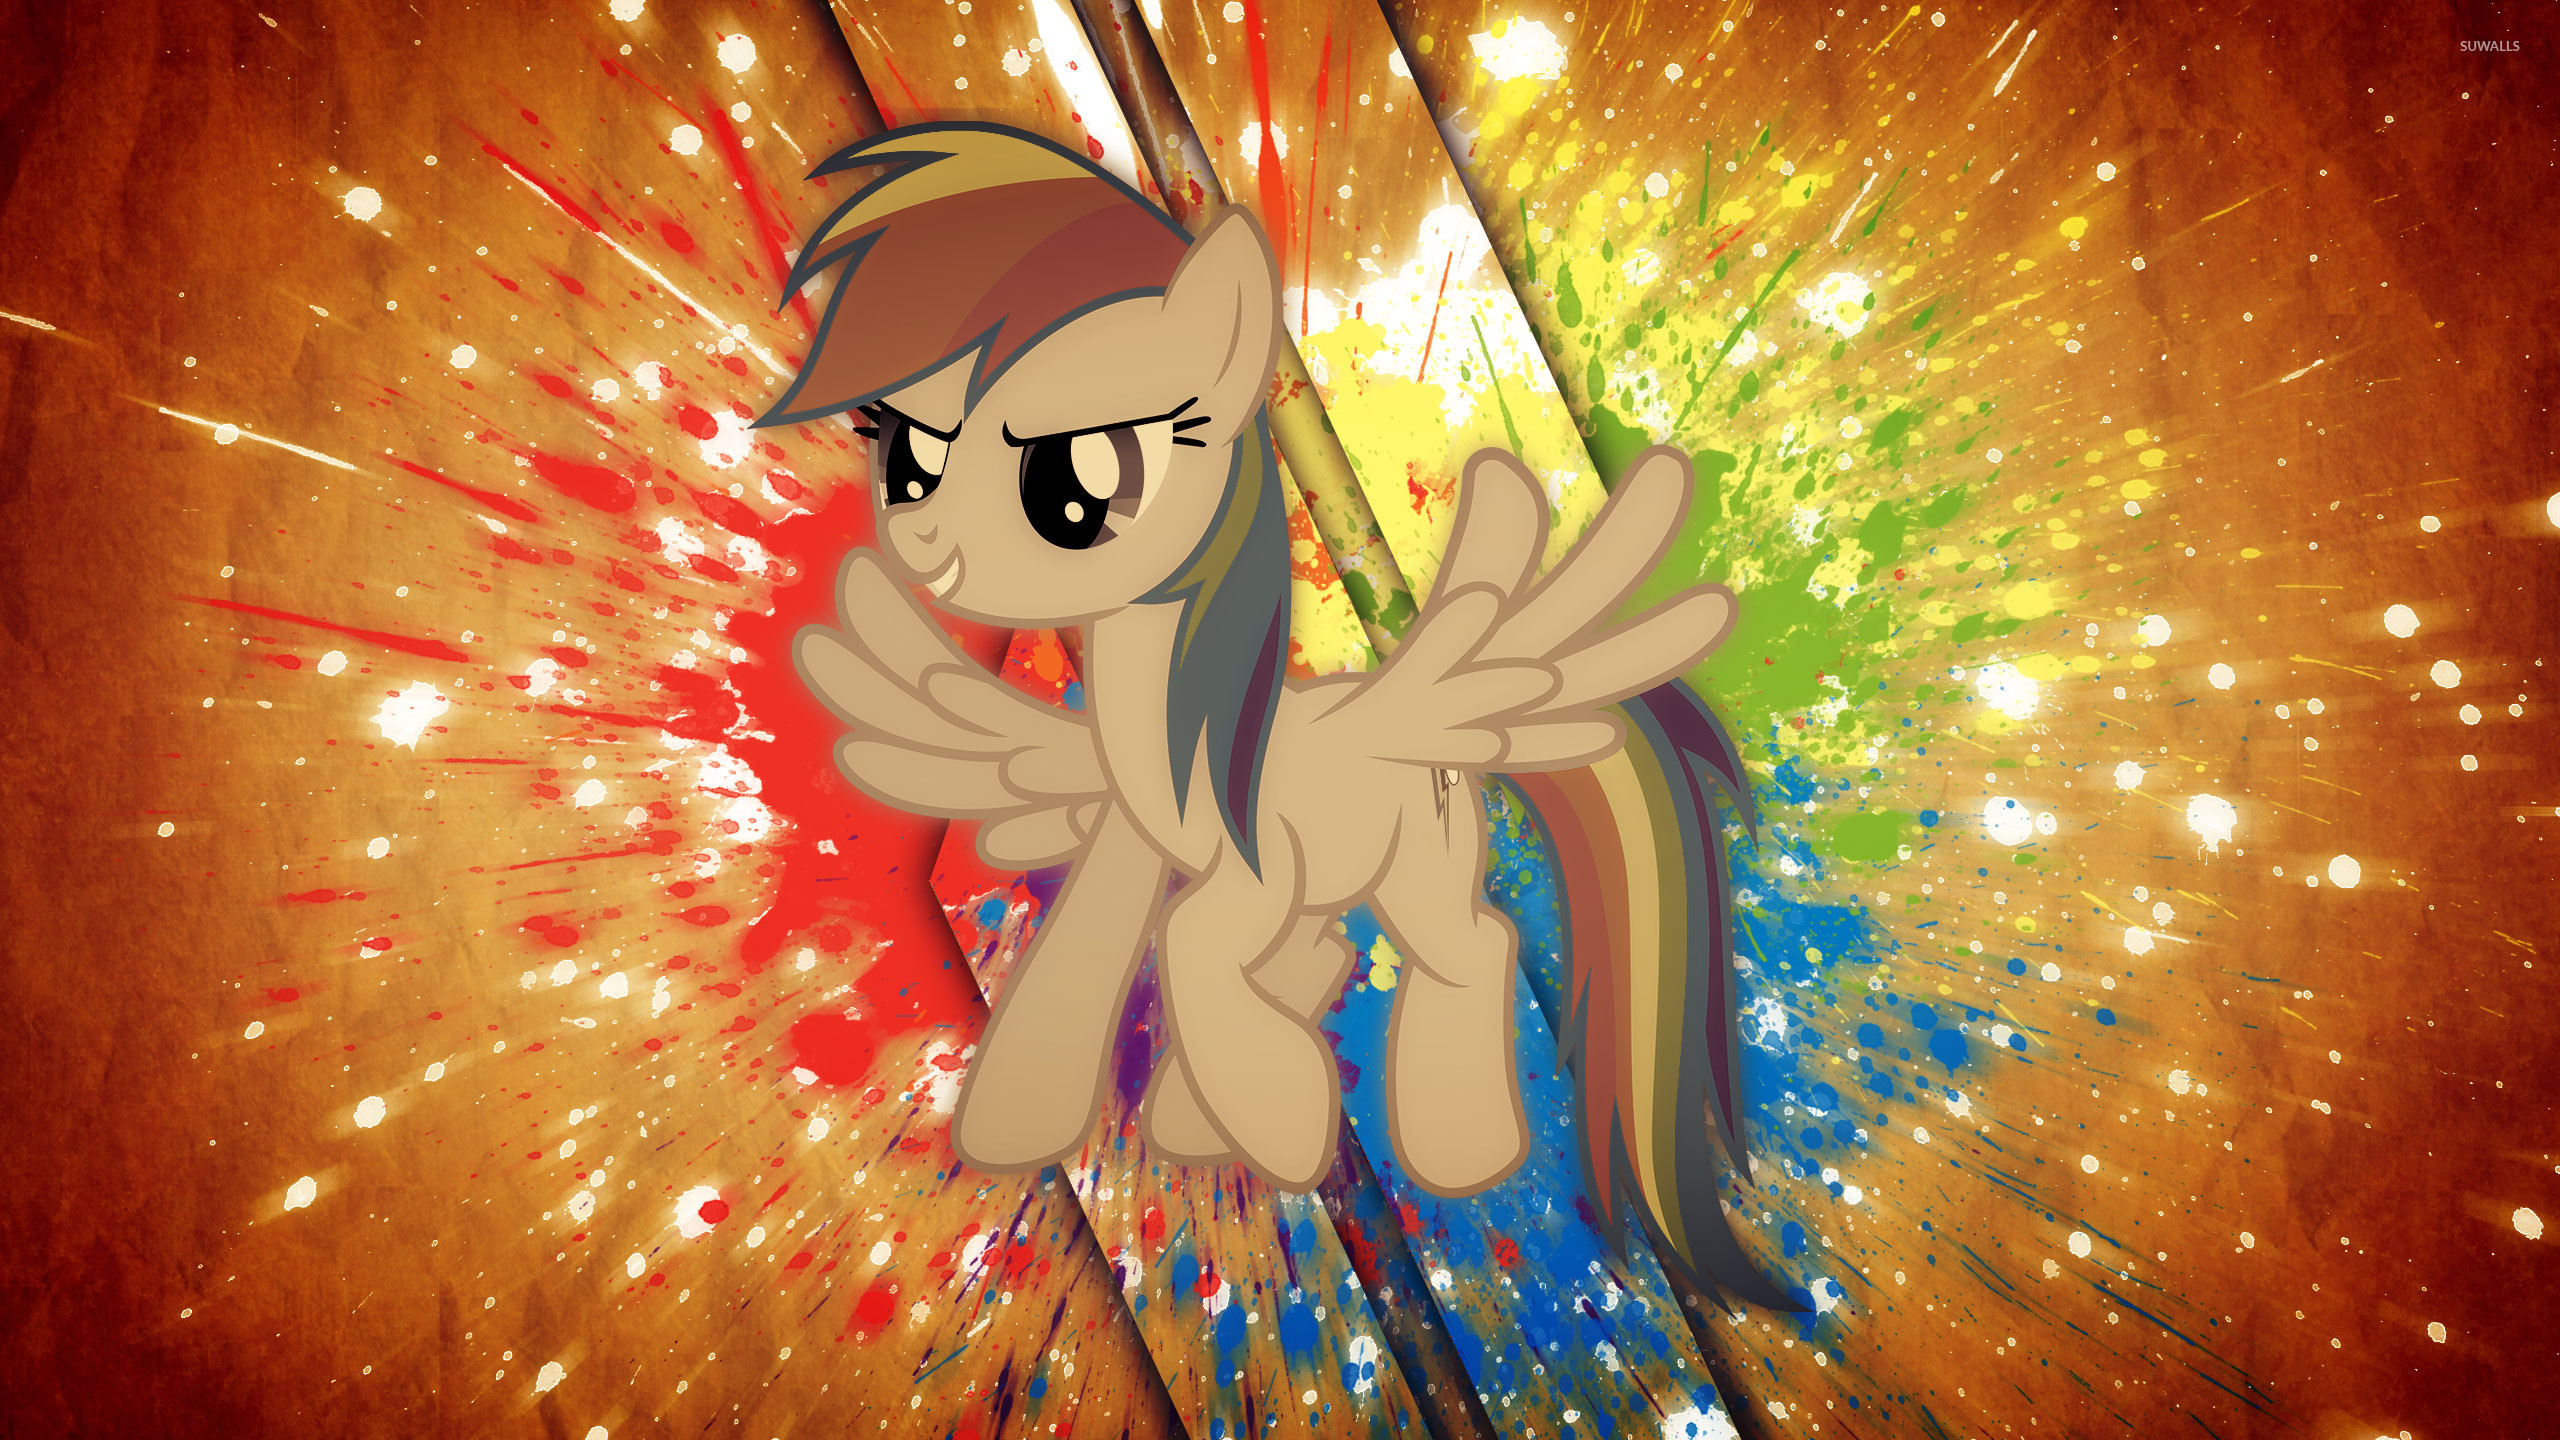 2560x1440 Rainbow Dash - My Little Pony Friendship is Magic [6] wallpaper   jpg